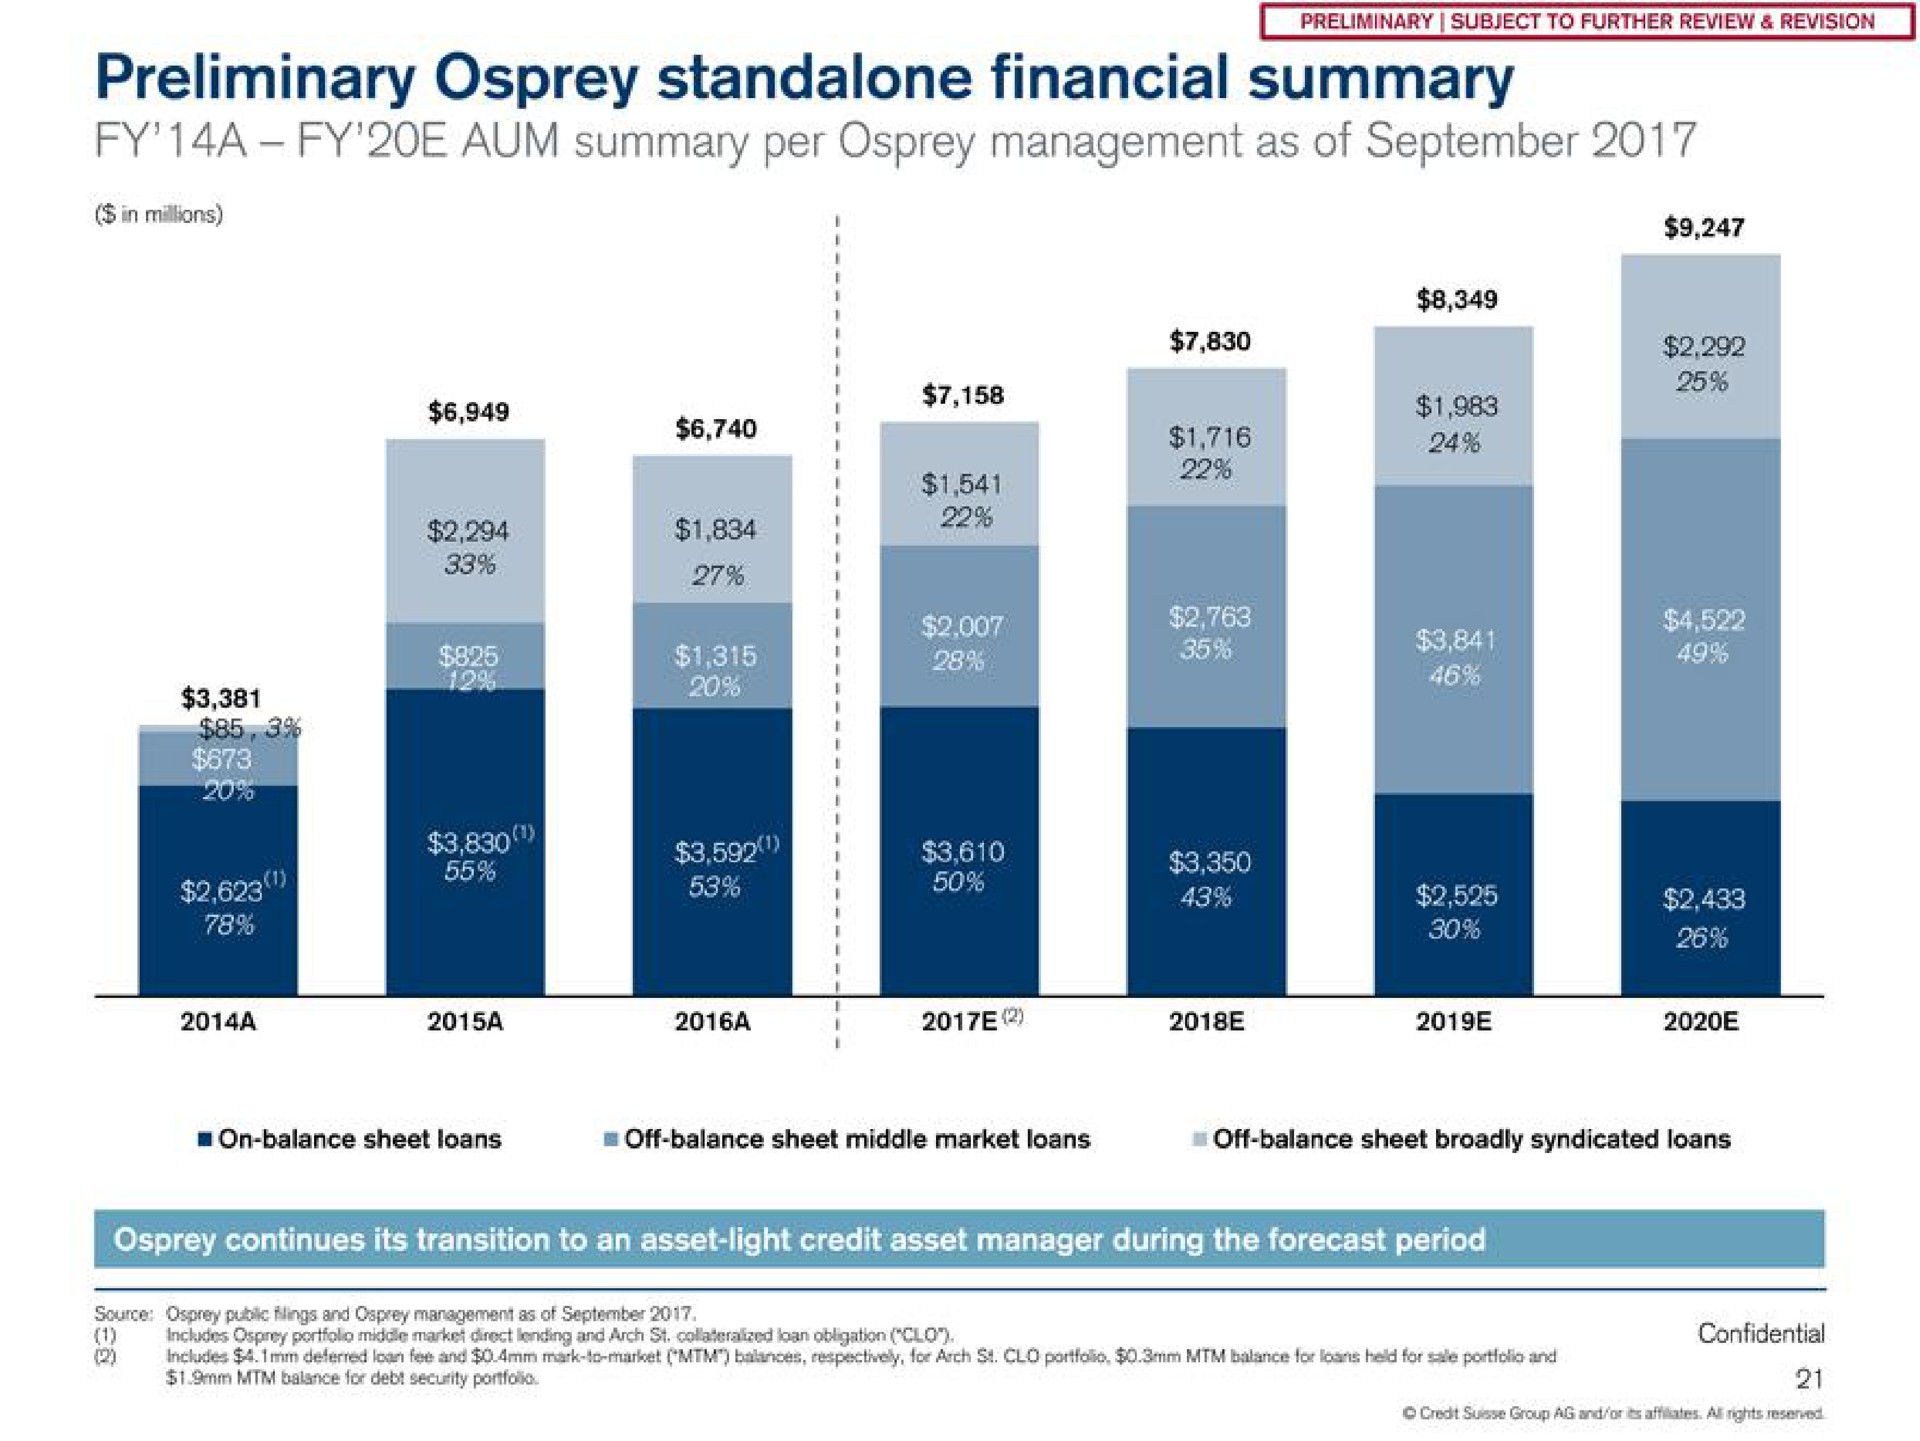 preliminary osprey financial summary a aum summary per osprey management as of | Credit Suisse